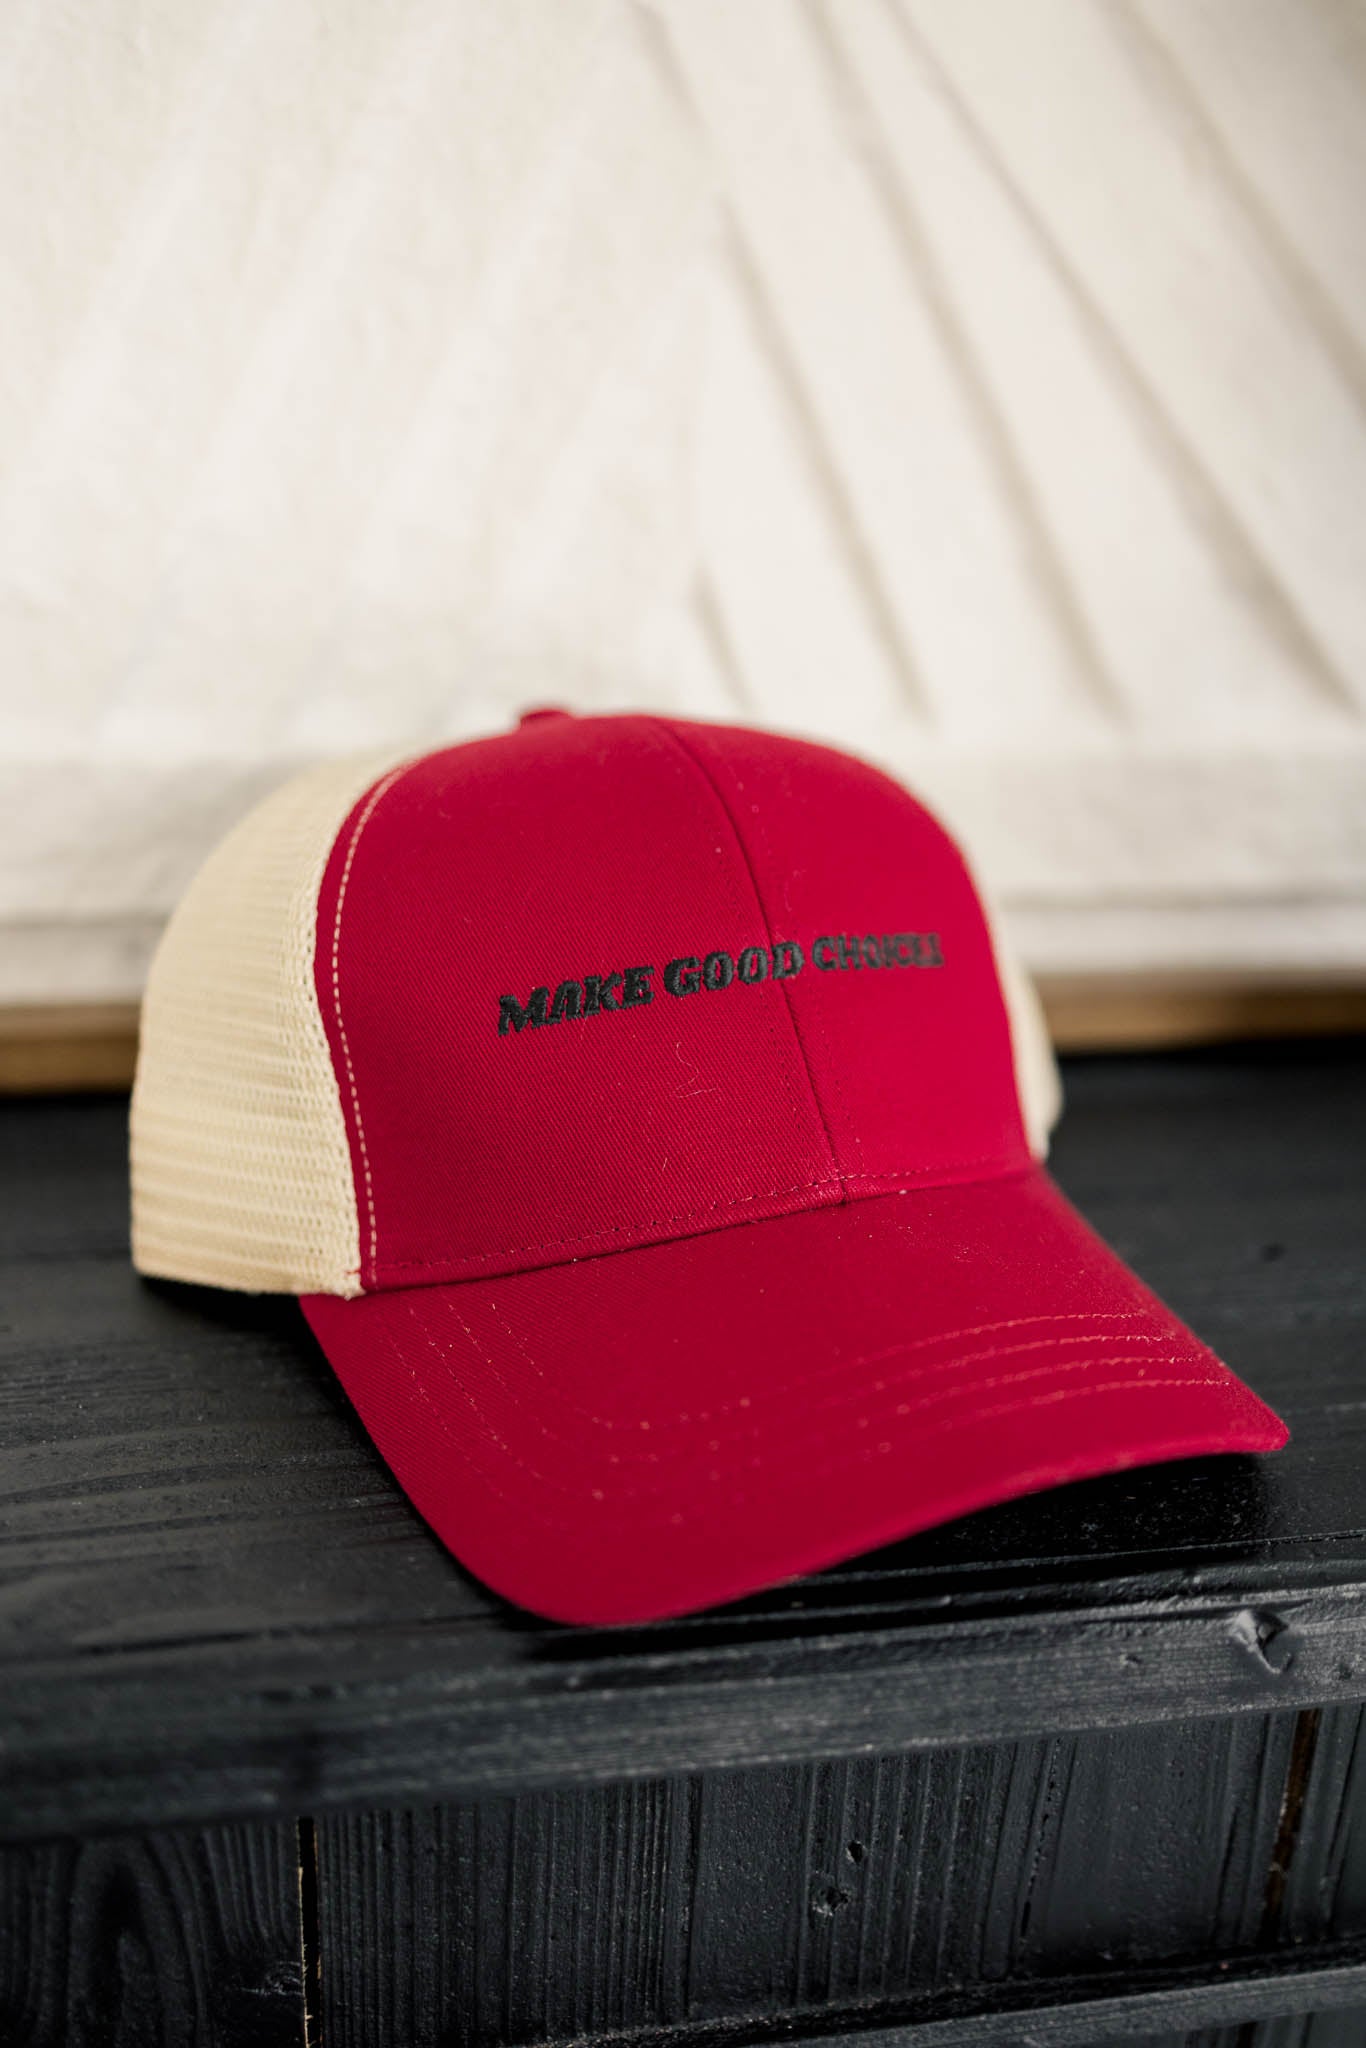 Make Good Choices Trucker Hat